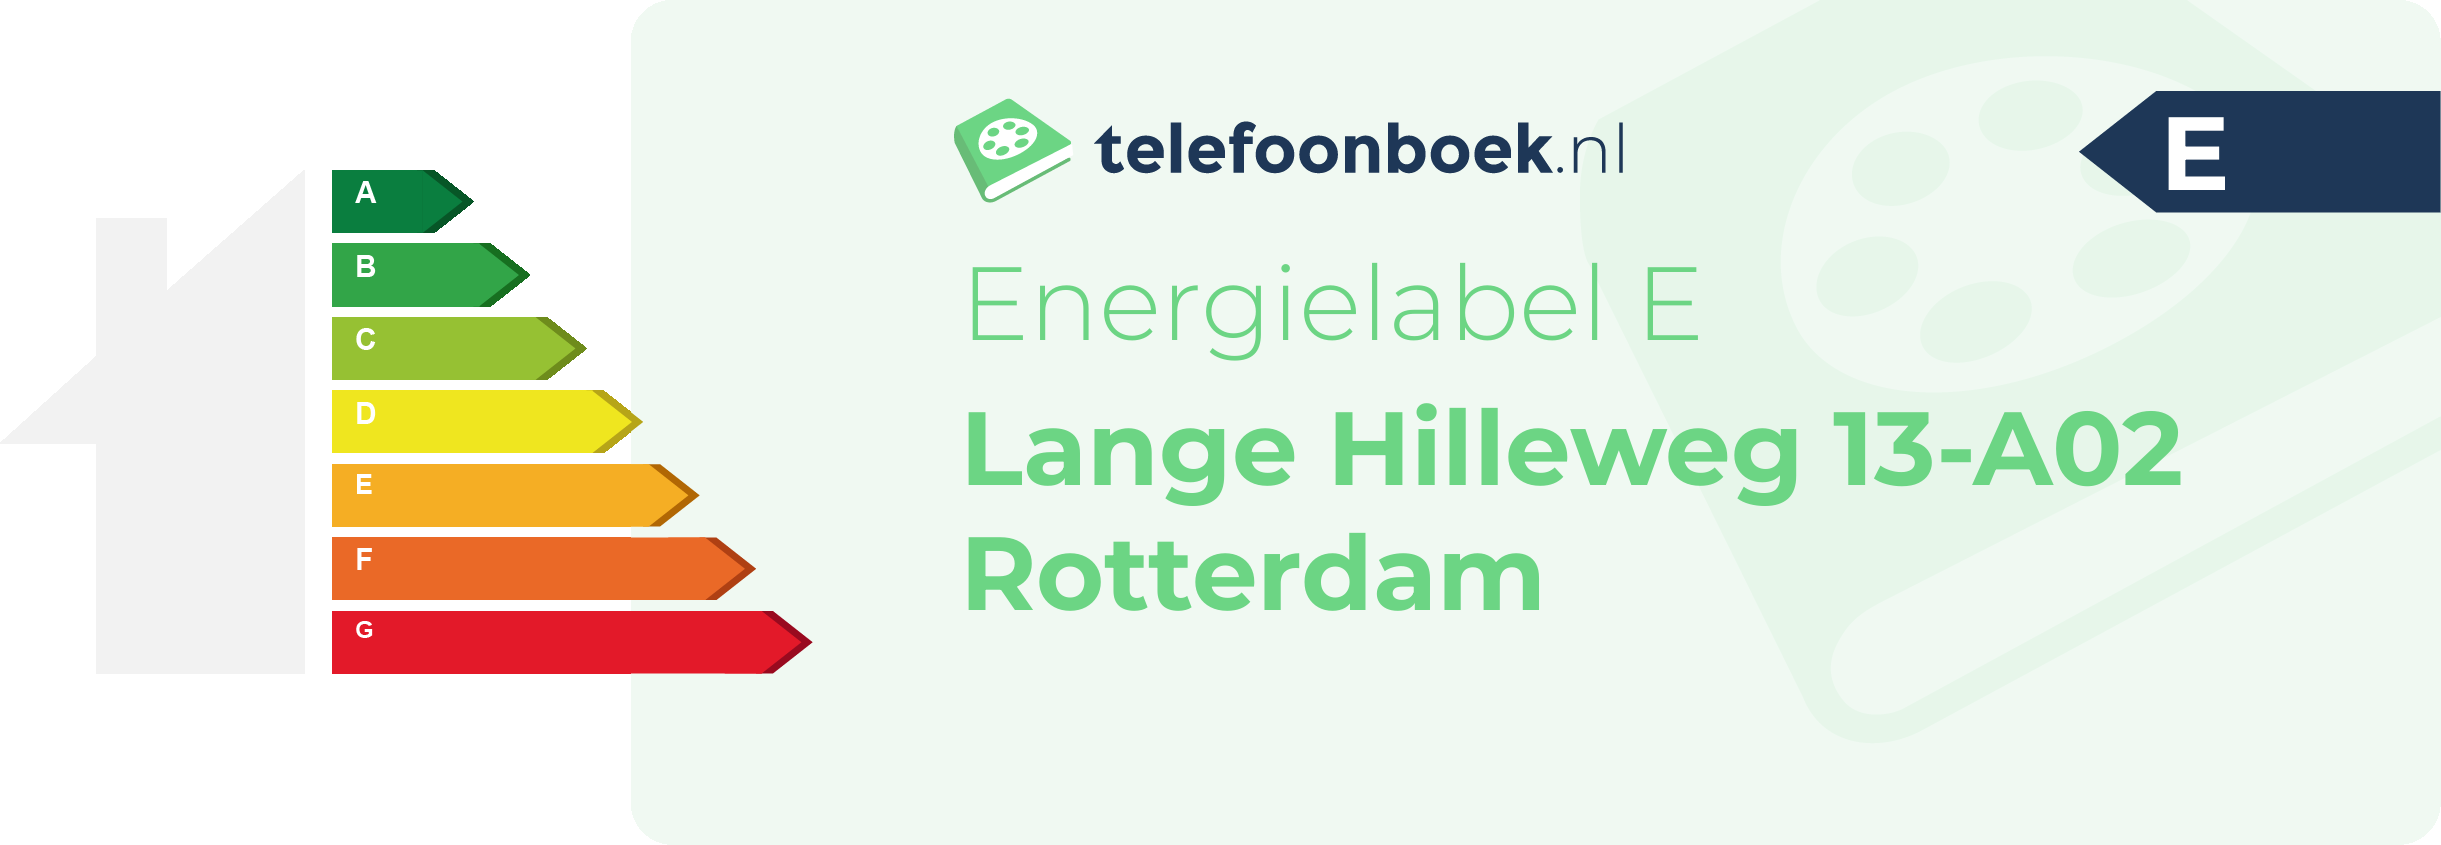 Energielabel Lange Hilleweg 13-A02 Rotterdam